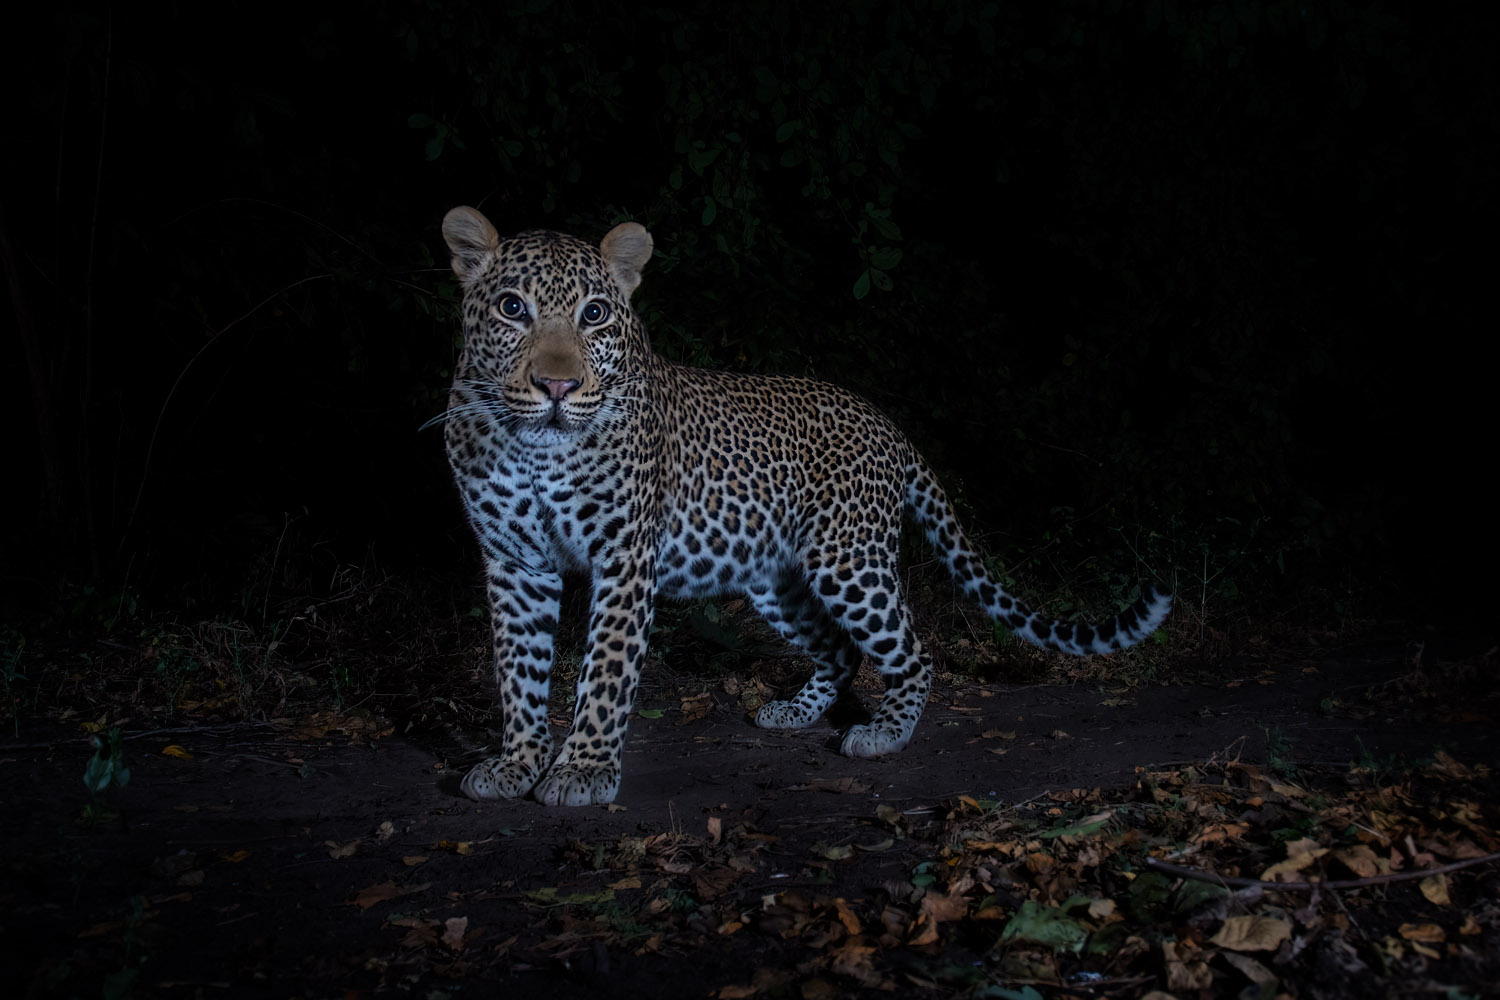 Afrika Reisen - Sambia, Leoparden im South Luangwa Nationalpark.